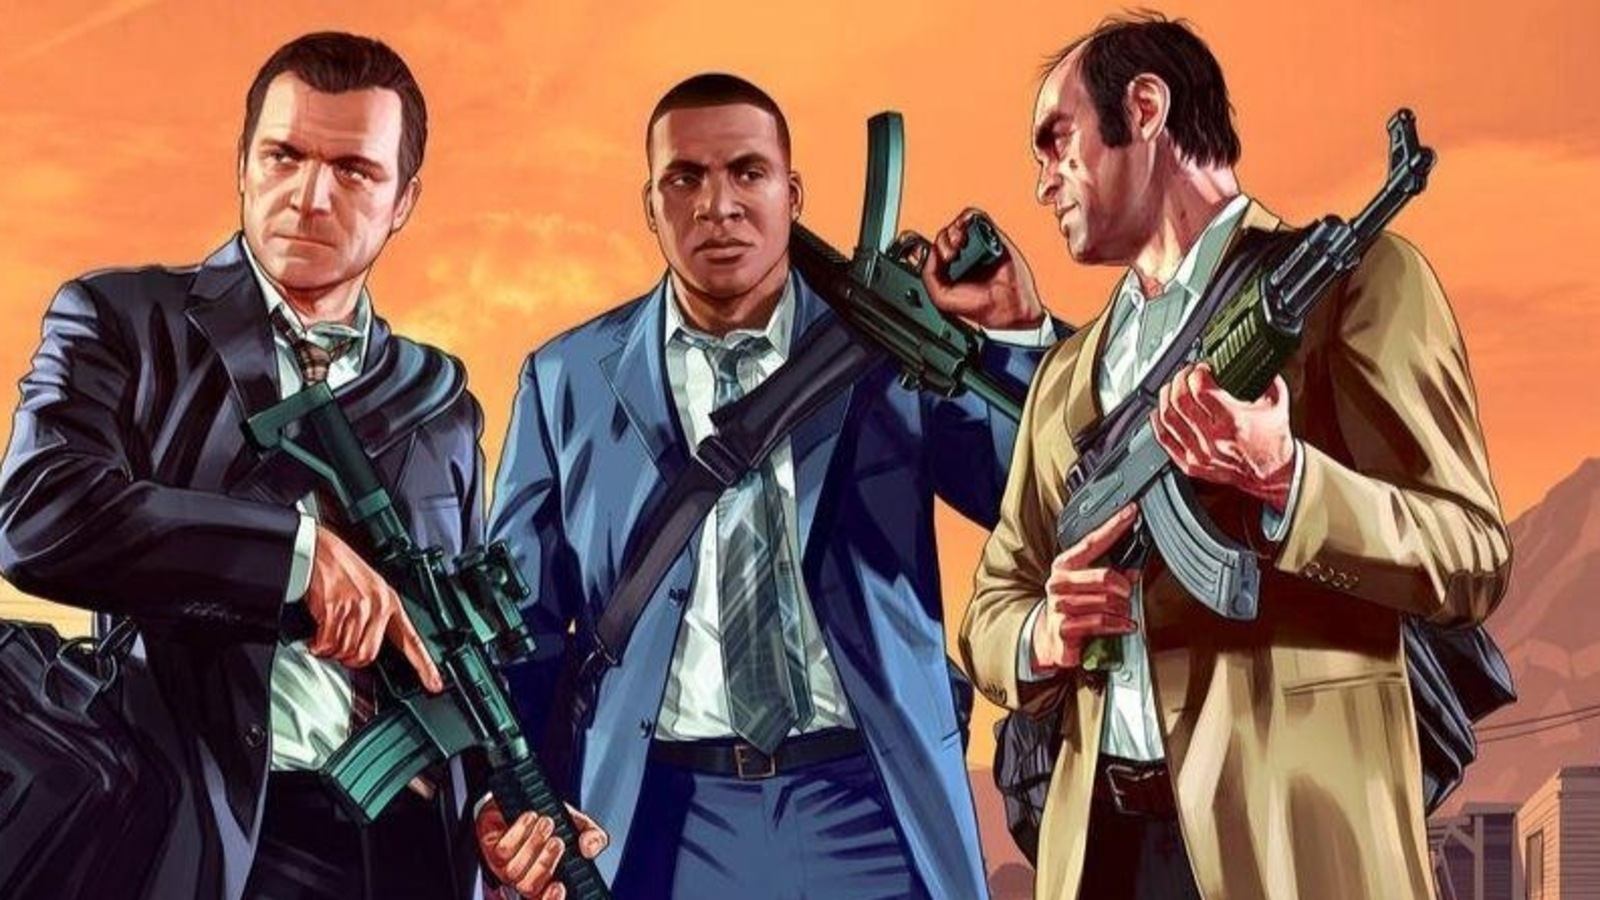 Grand Theft Auto VI (GTA6) Leak Is a Shock to Rockstar Games